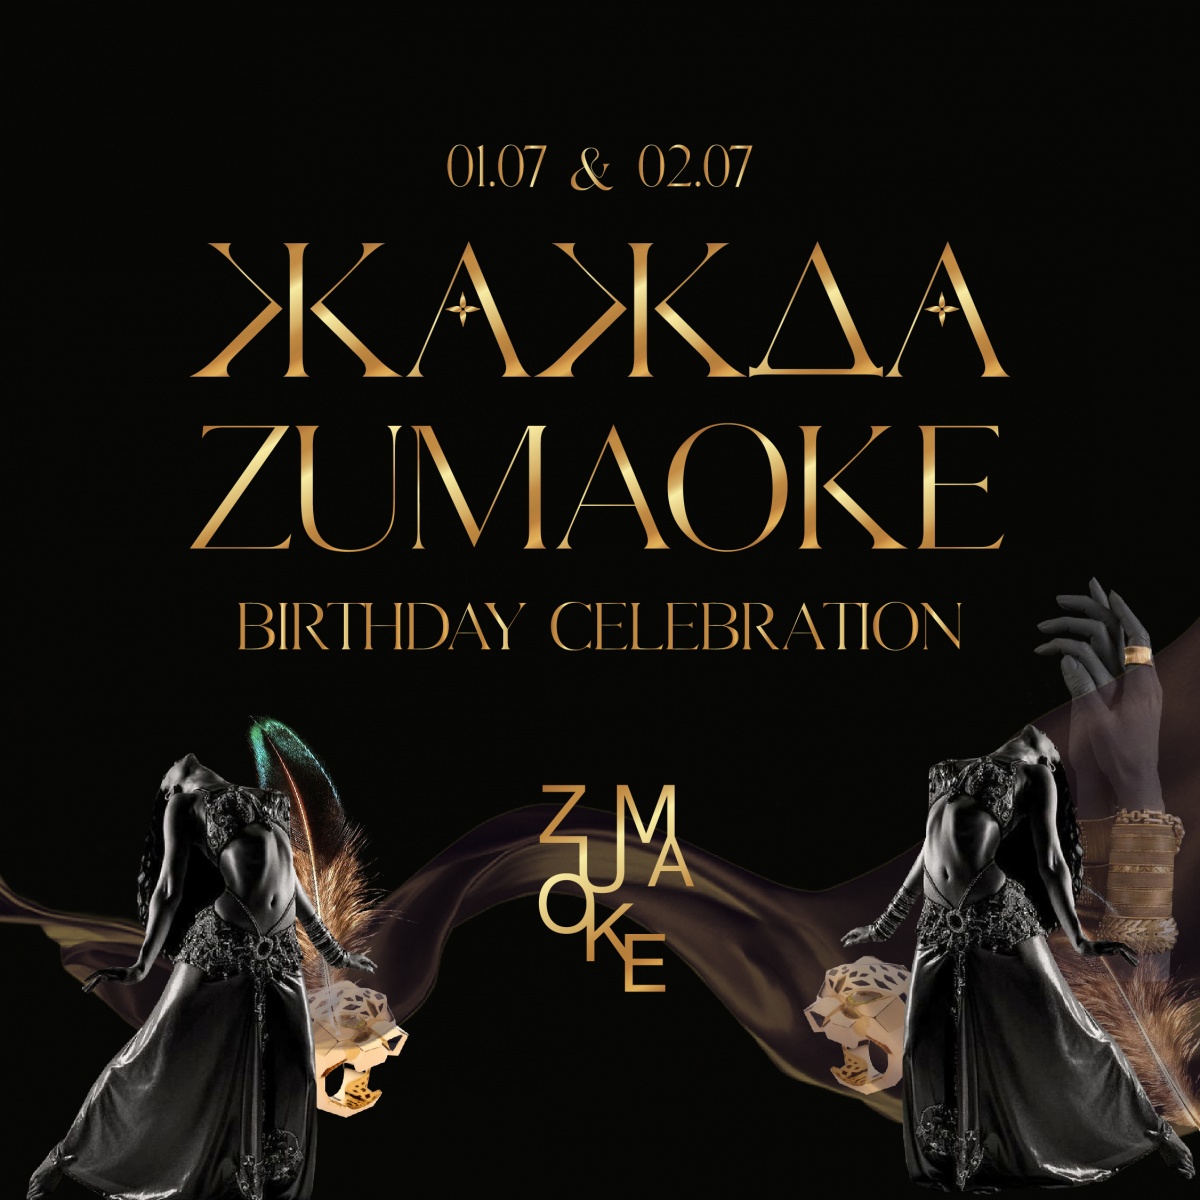  ZUMAOKE  BIRTHDAY CELEBRATION 1.07 &2.07